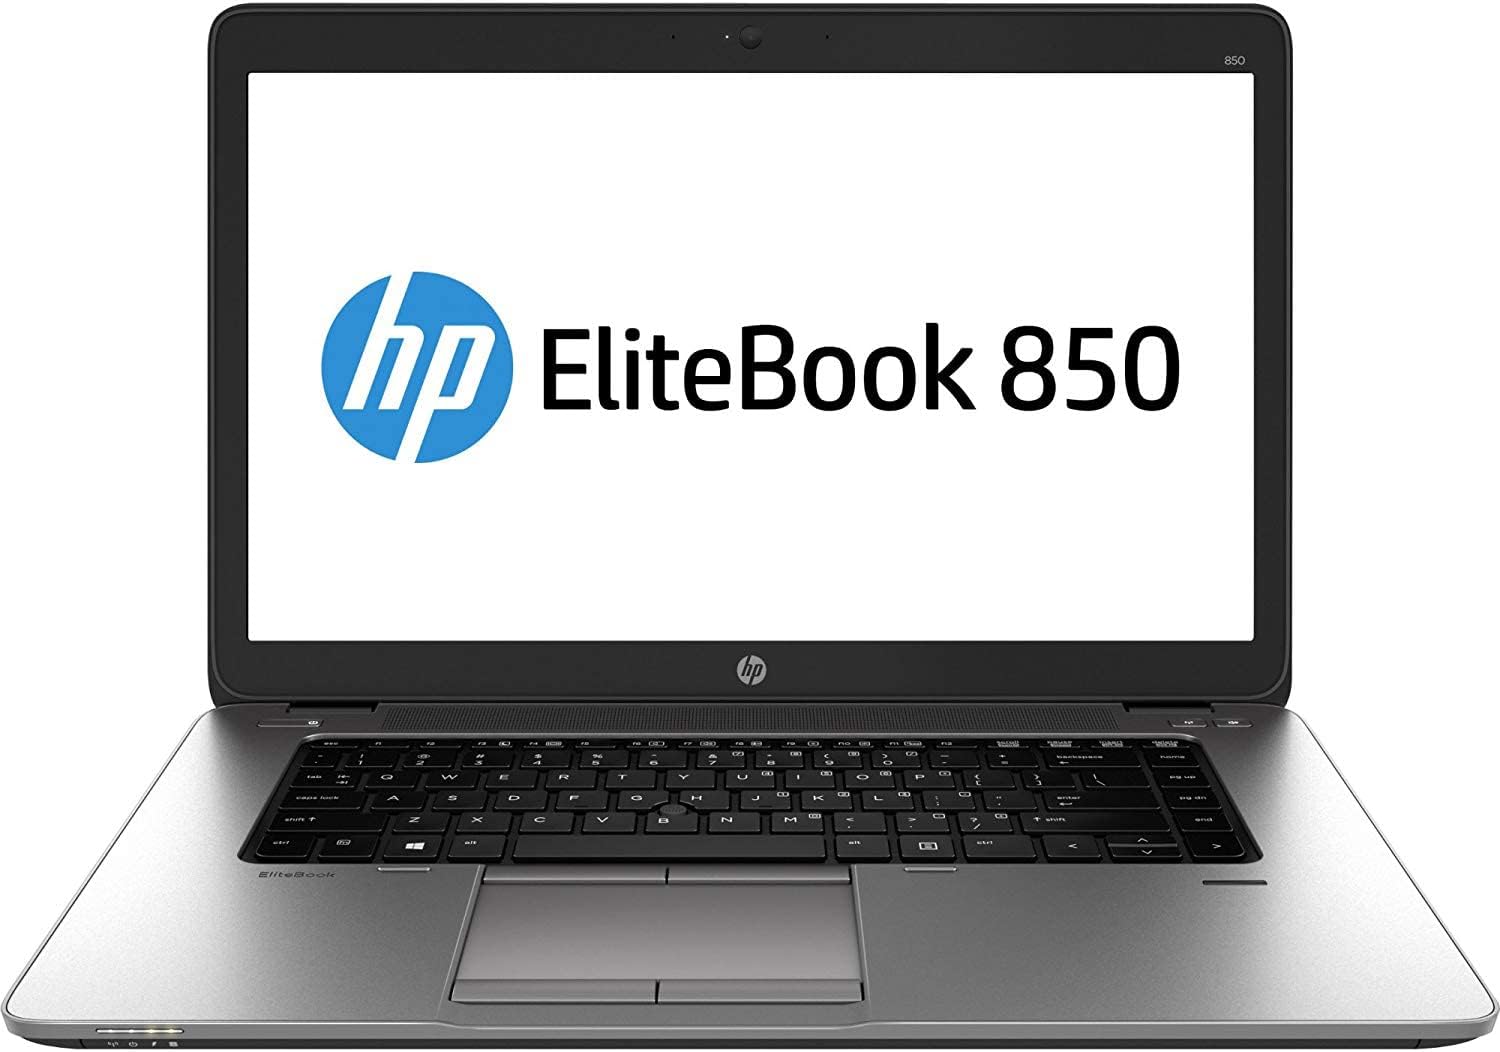 HP EliteBook 850 G1 15.6" Laptop, Intel Core i7, 8GB, 256GB SSD, Win10 Pro (Renewed)